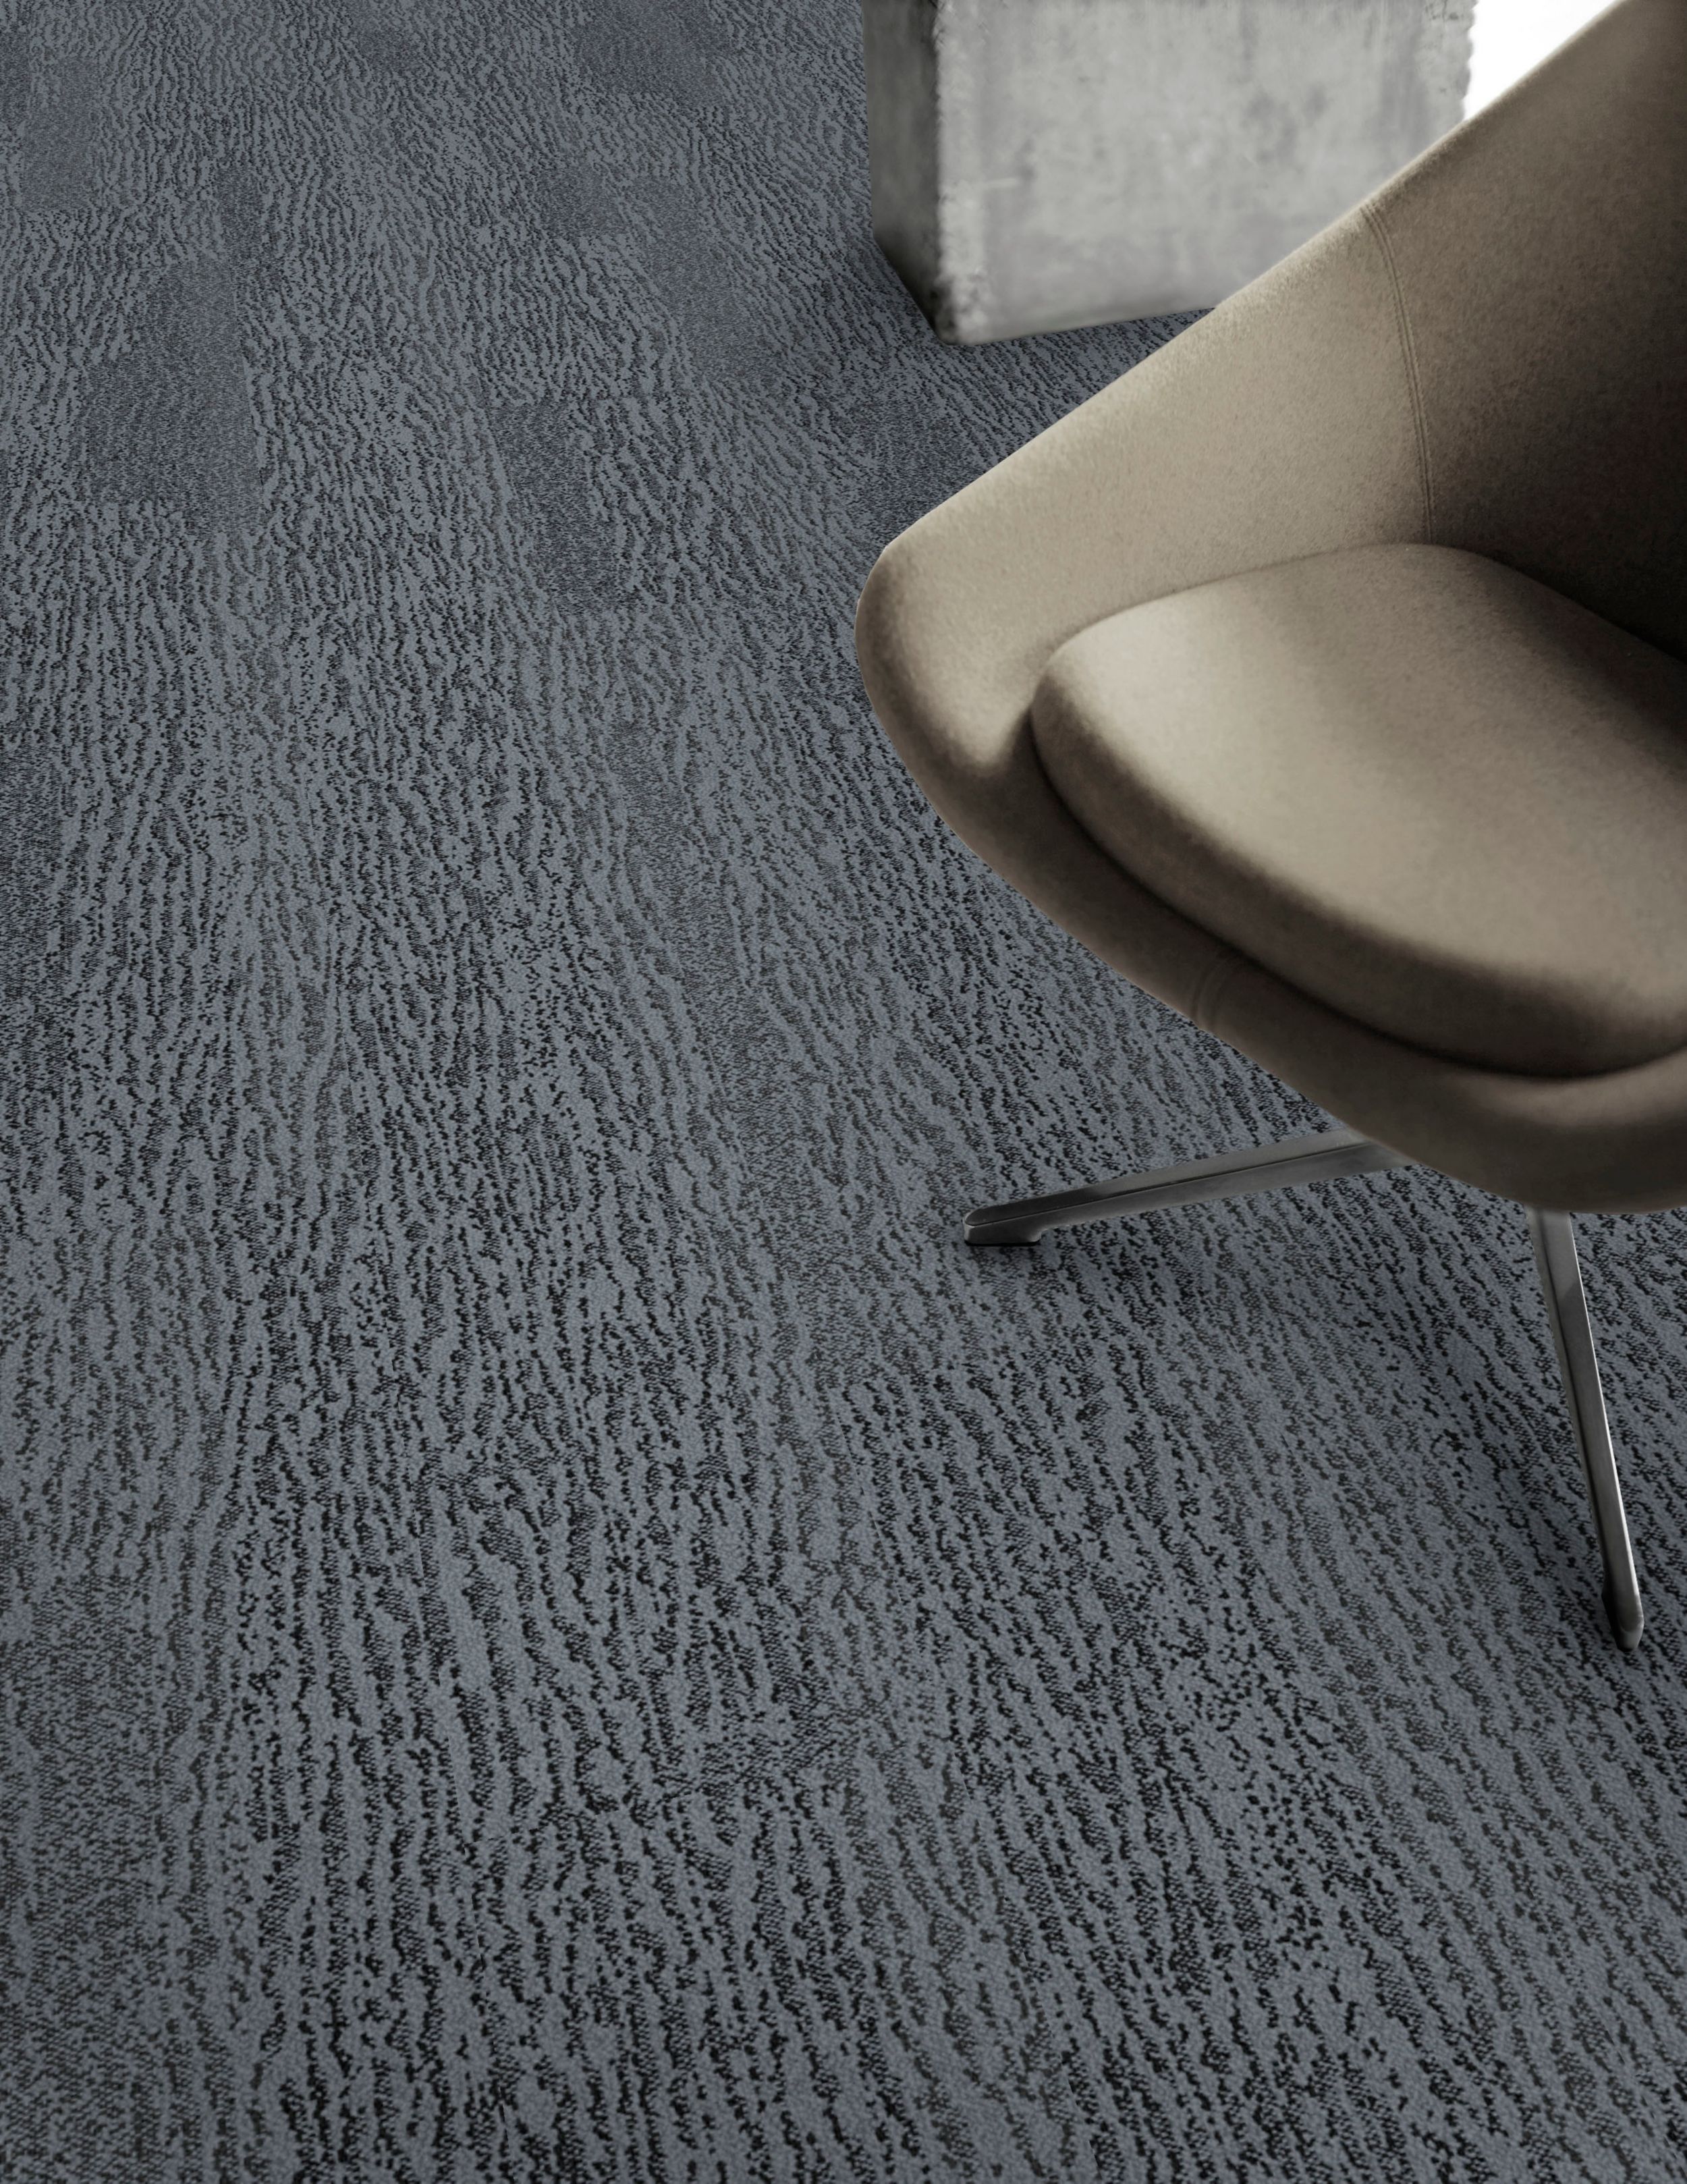 Detail of Interface Velvet Bark carpet tile with chair numéro d’image 3